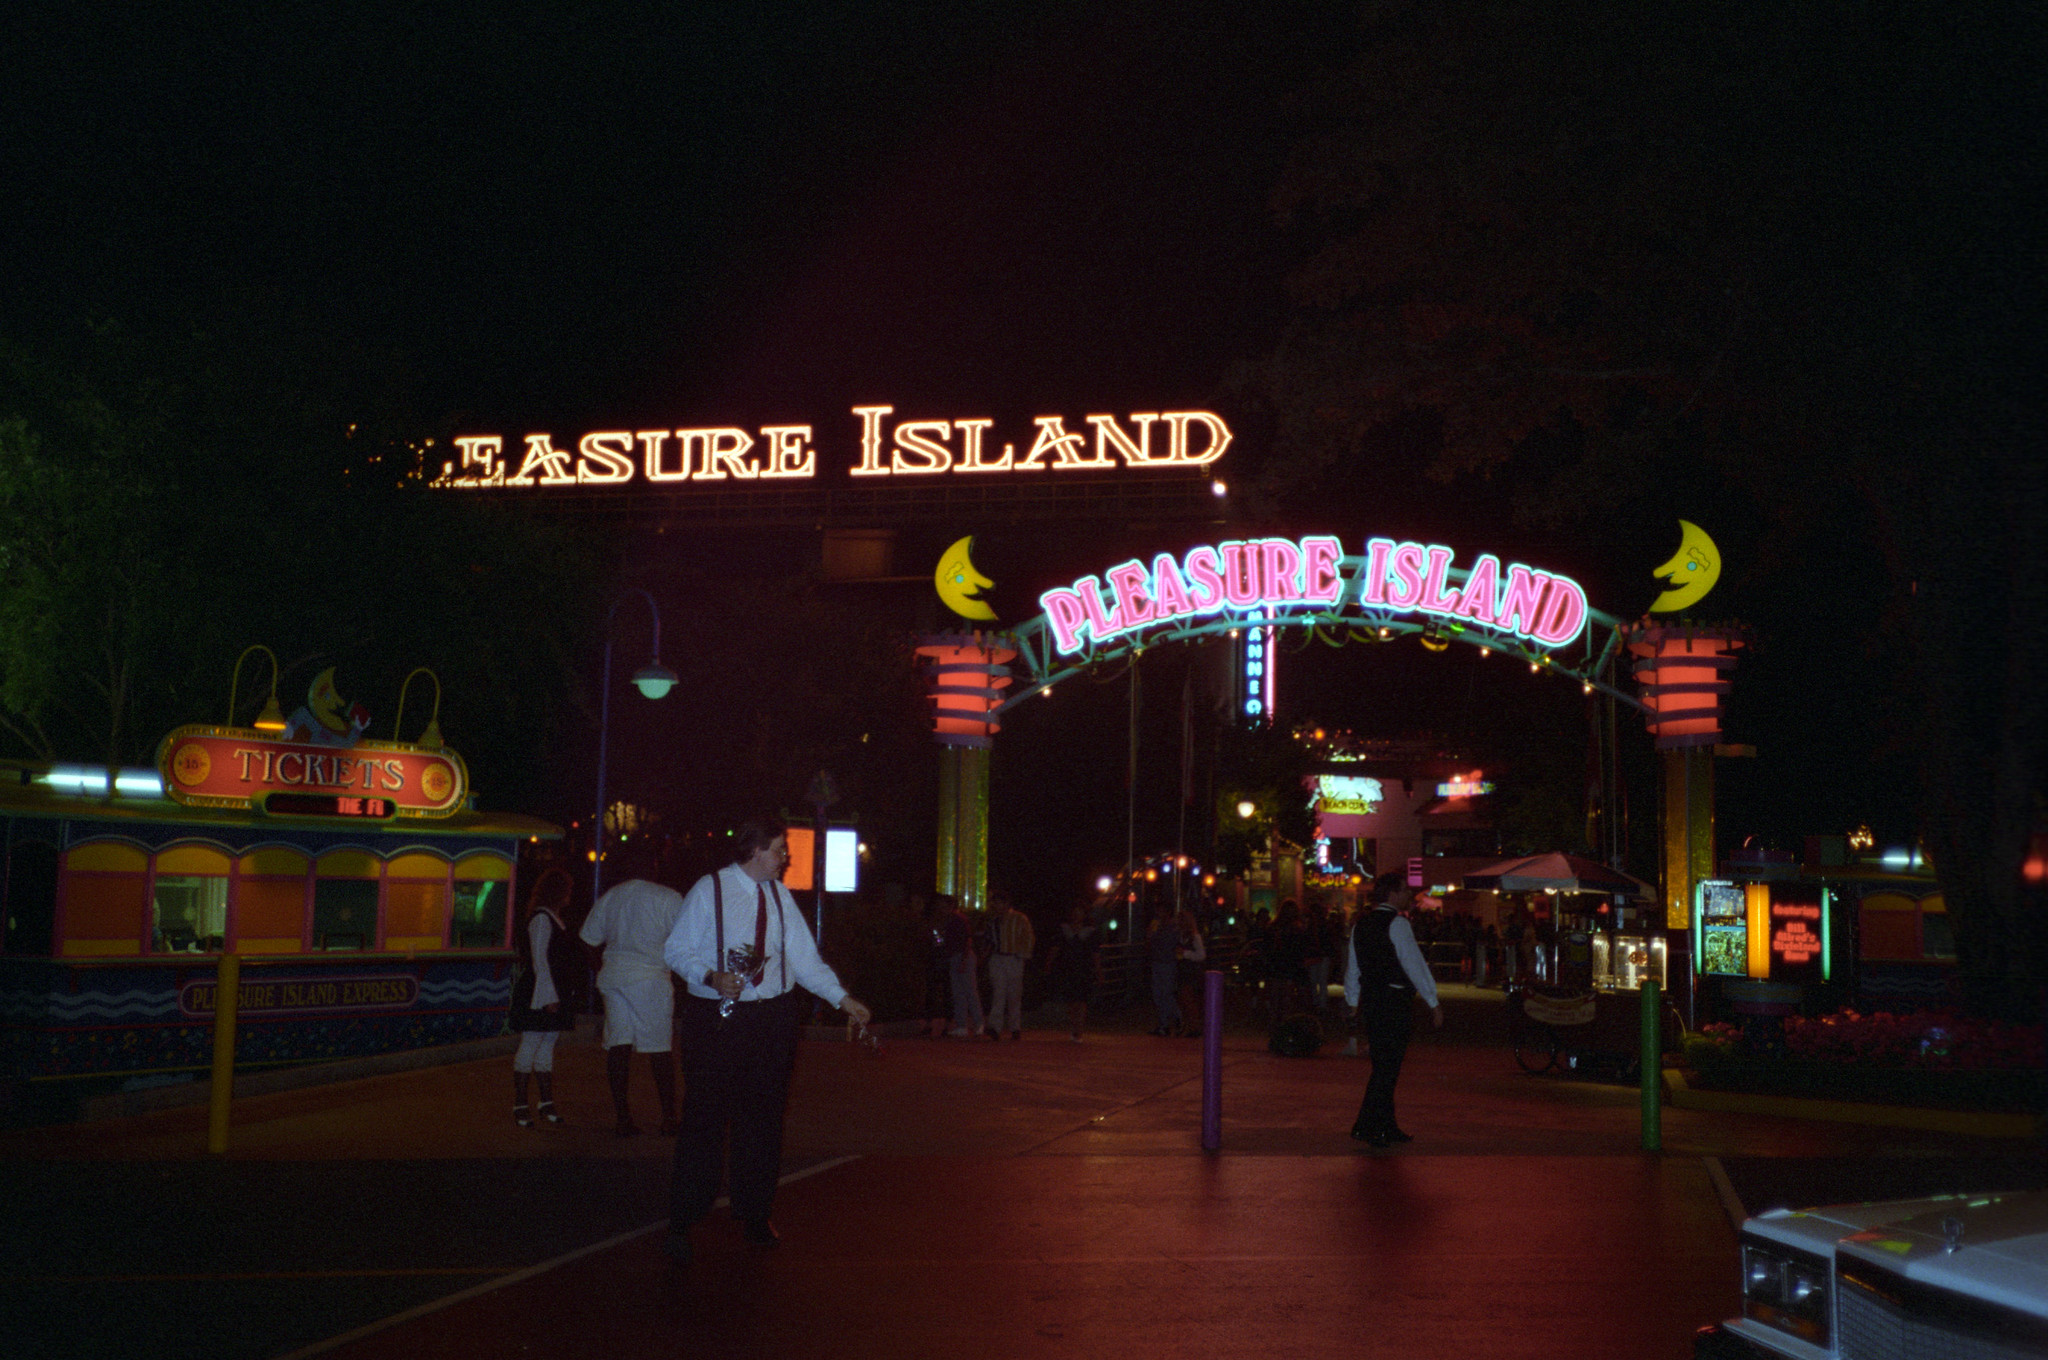 Pleasure Island